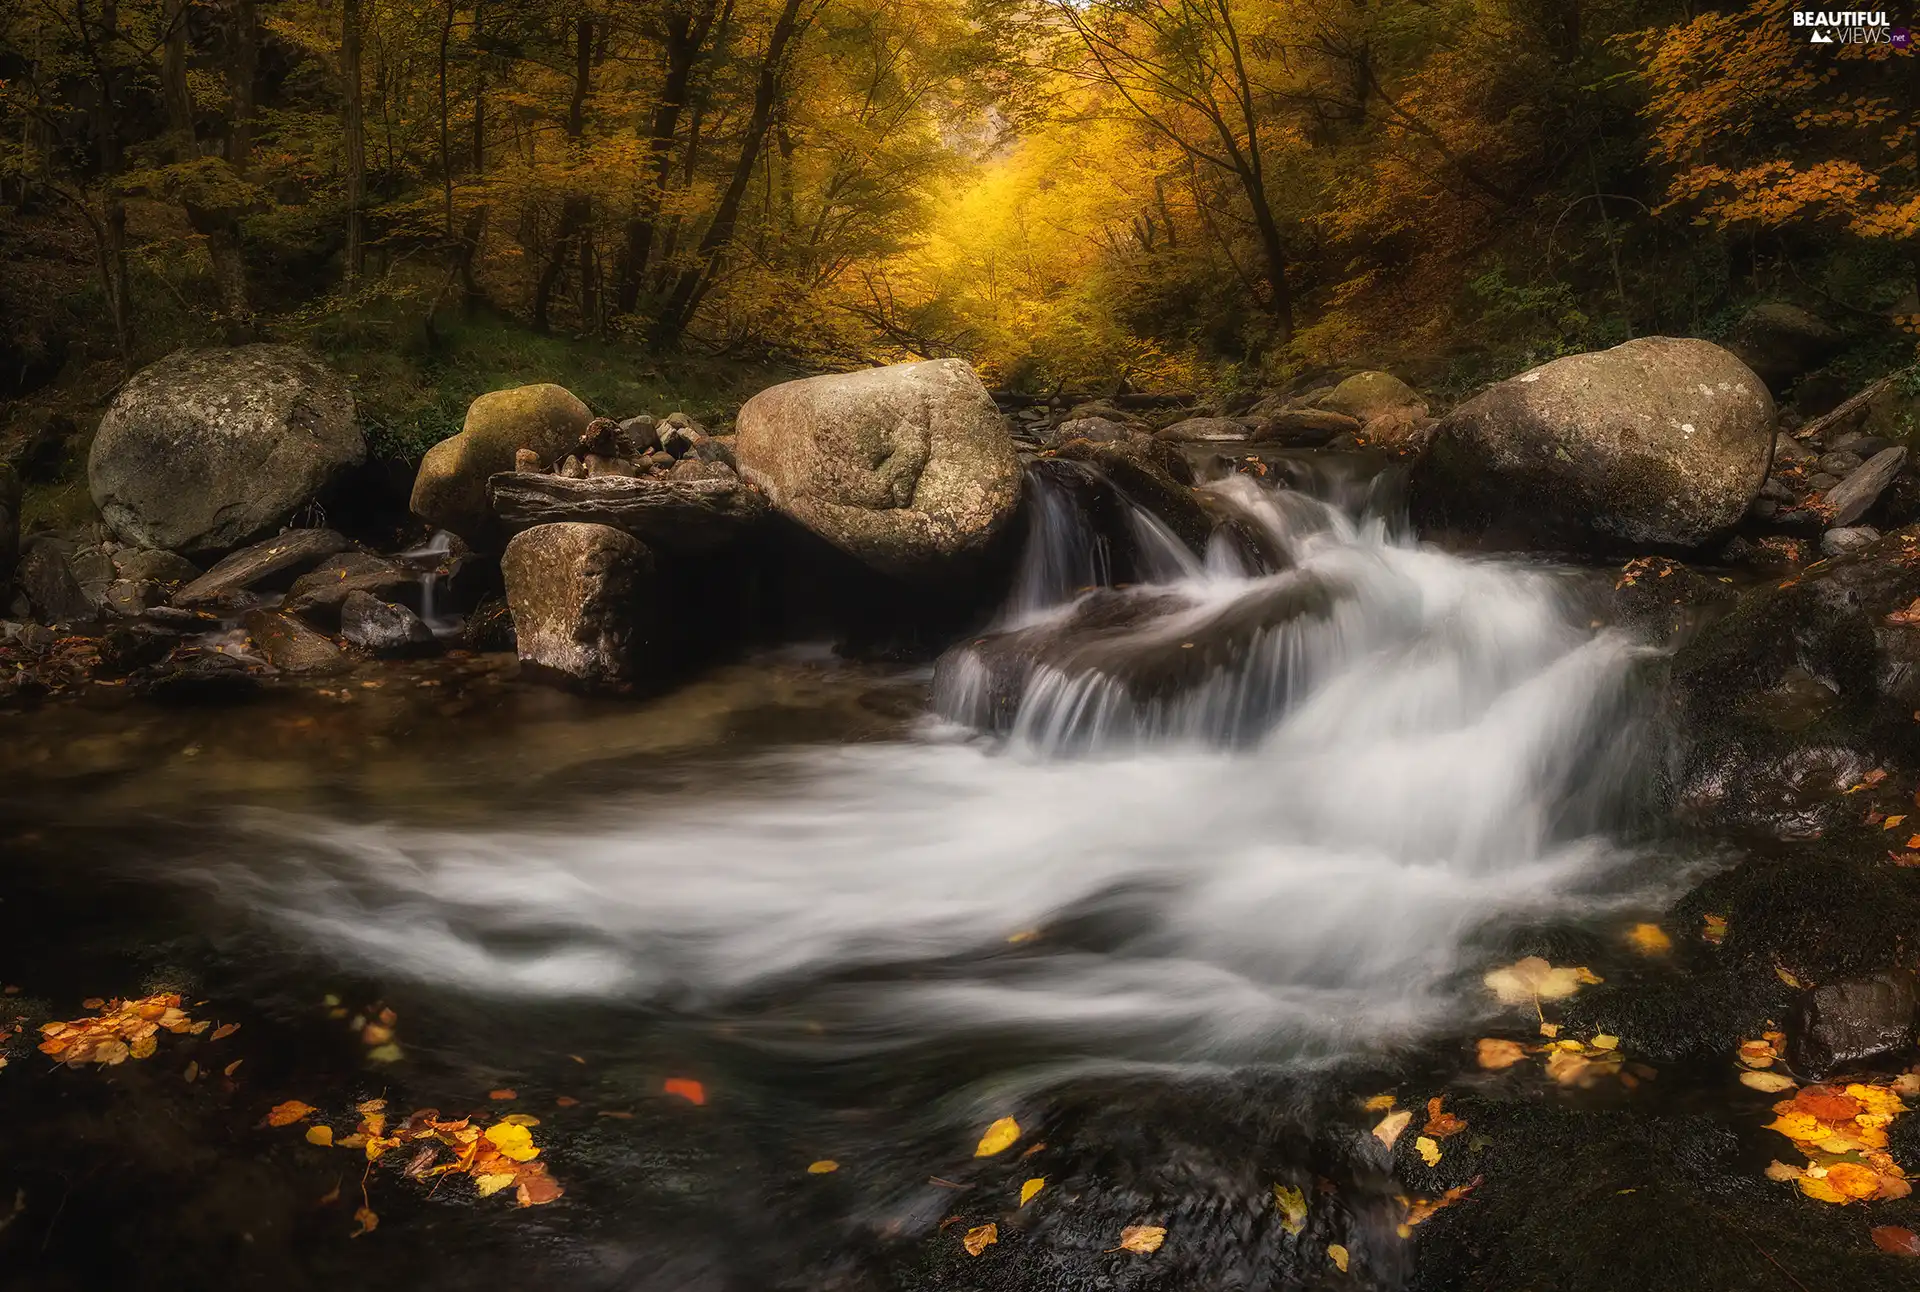 River, autumn, fallen, Leaf, Stones, forest